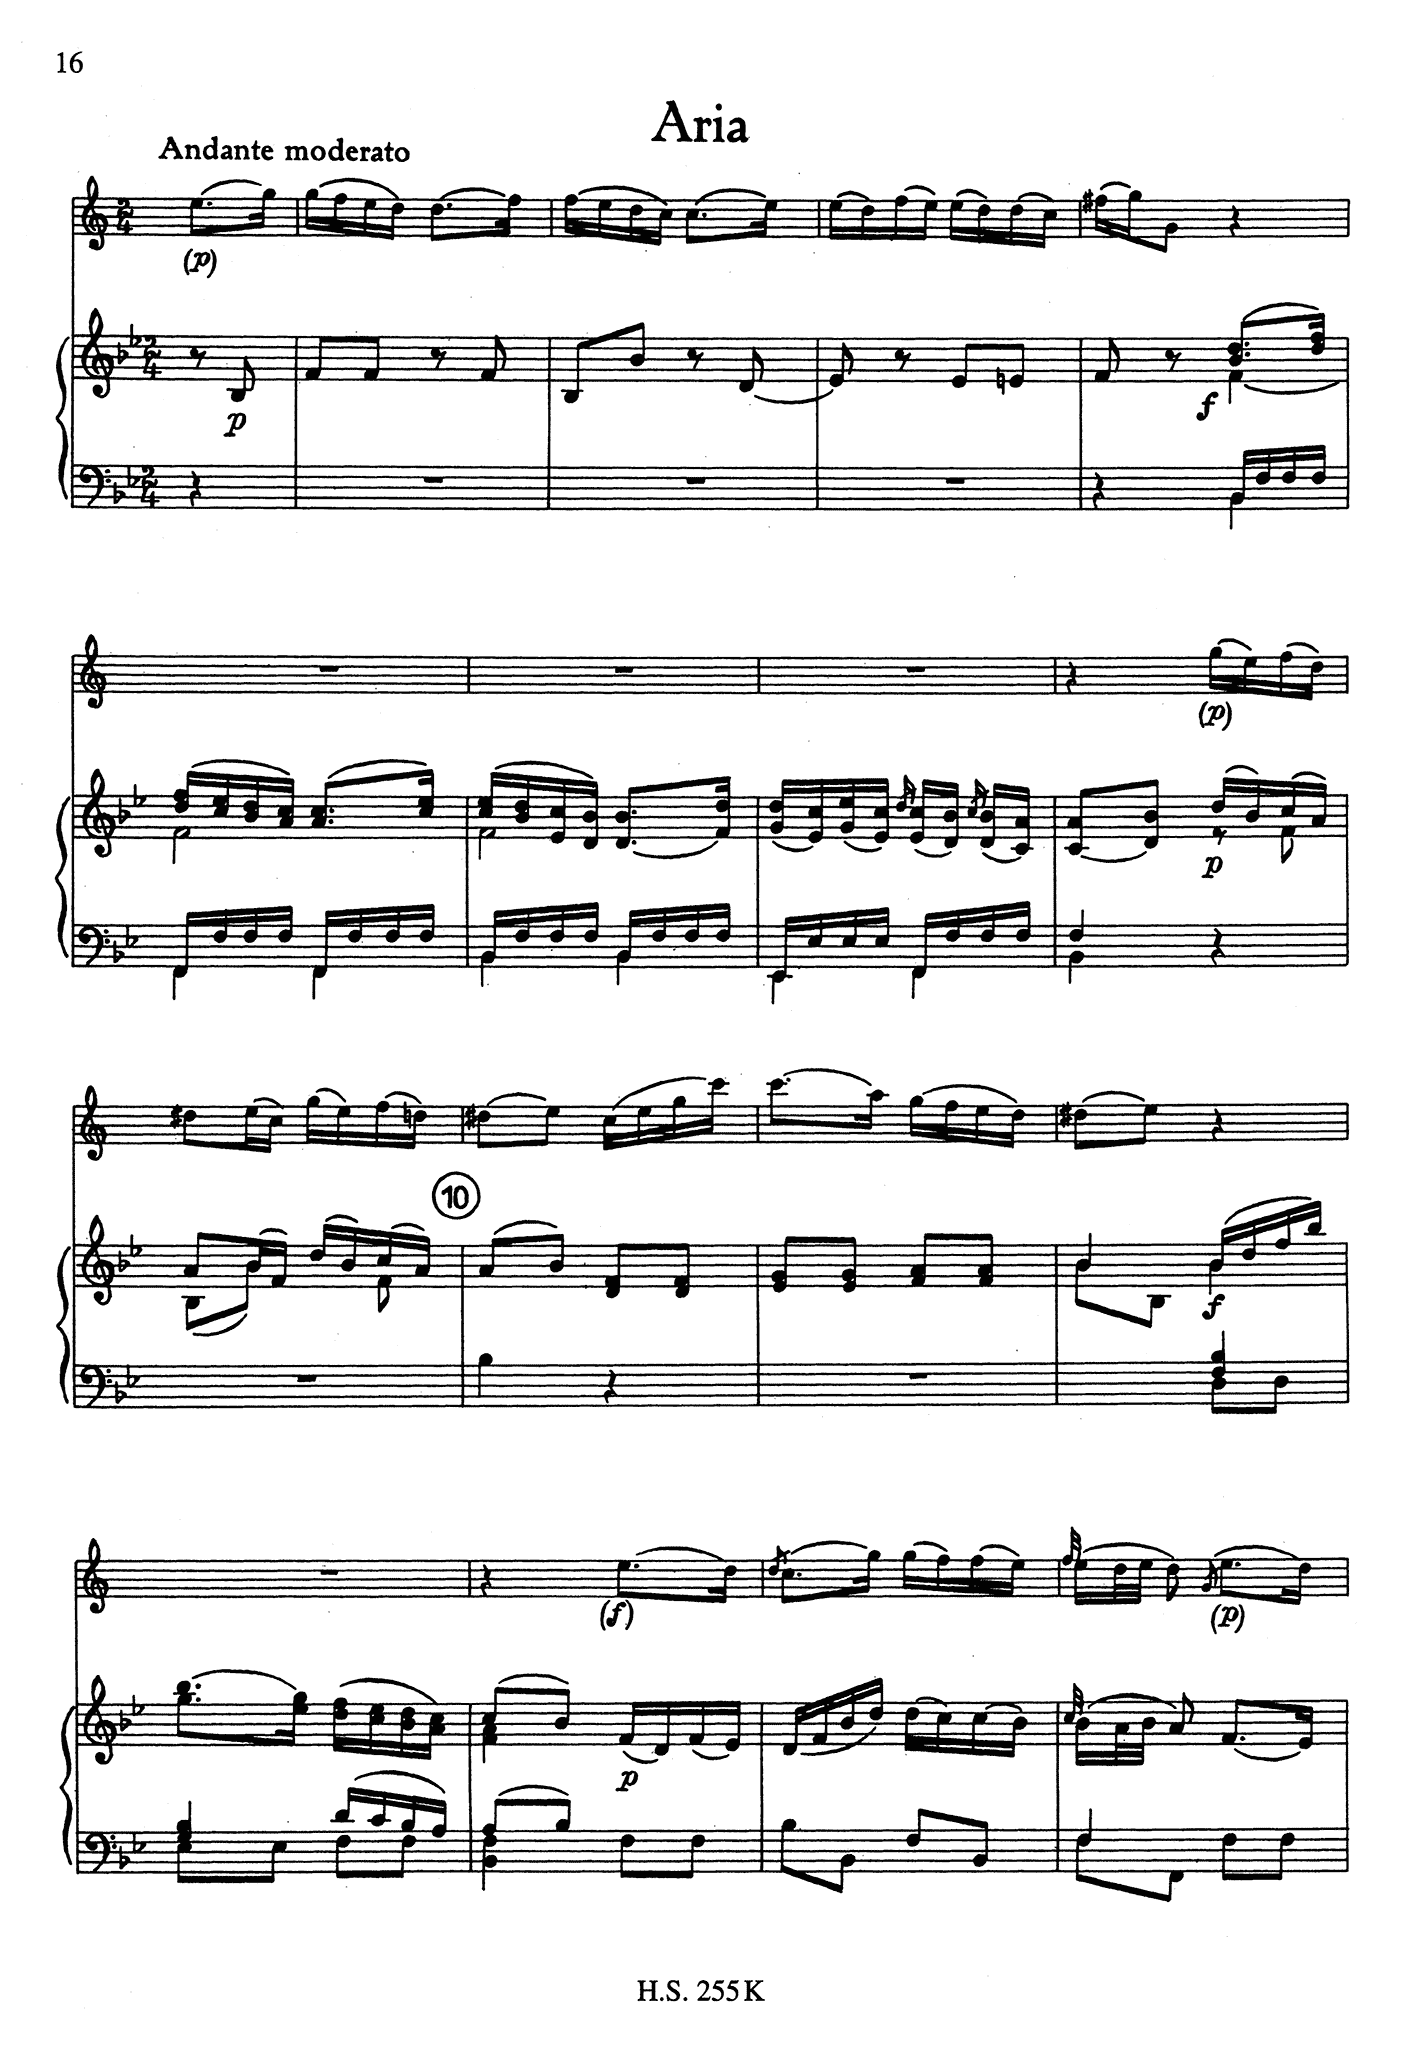 Carl Stamitz Clarinet Concerto No. 11 (Kaiser) in E-flat Major - Movement 2